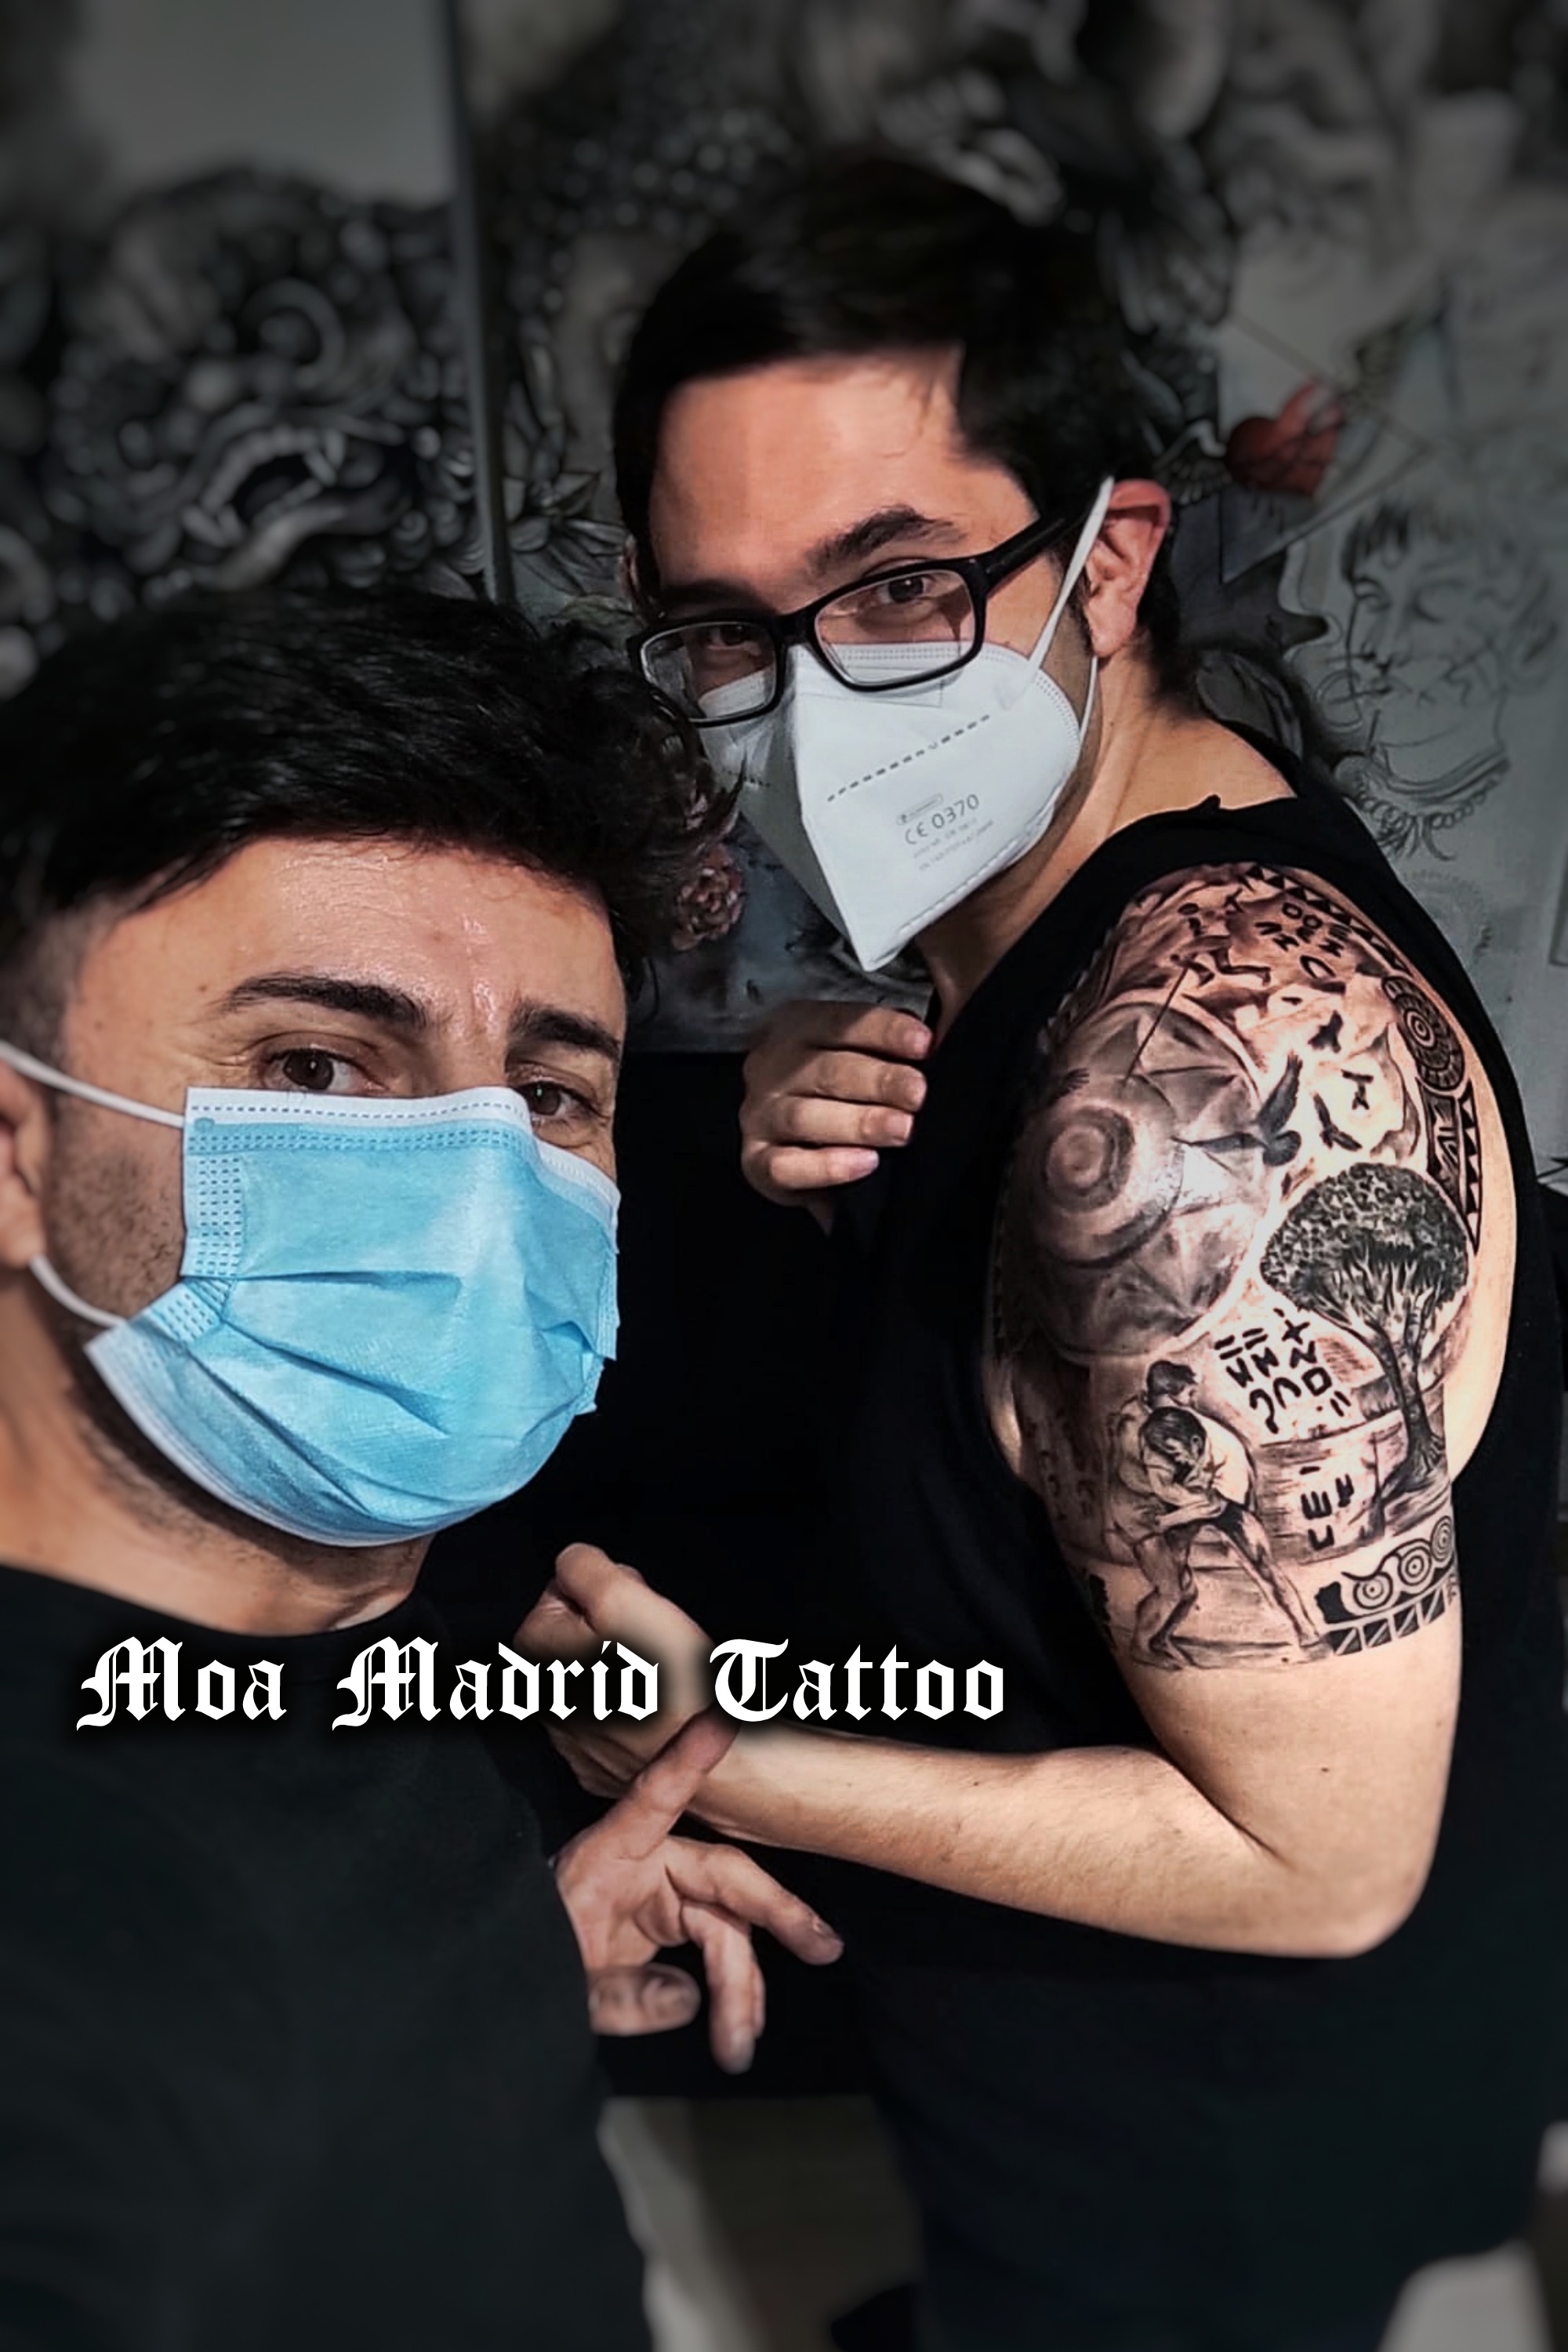 Soy Moa, diseñador y tatuador de este tattoo homenaje a la isla de La Palma